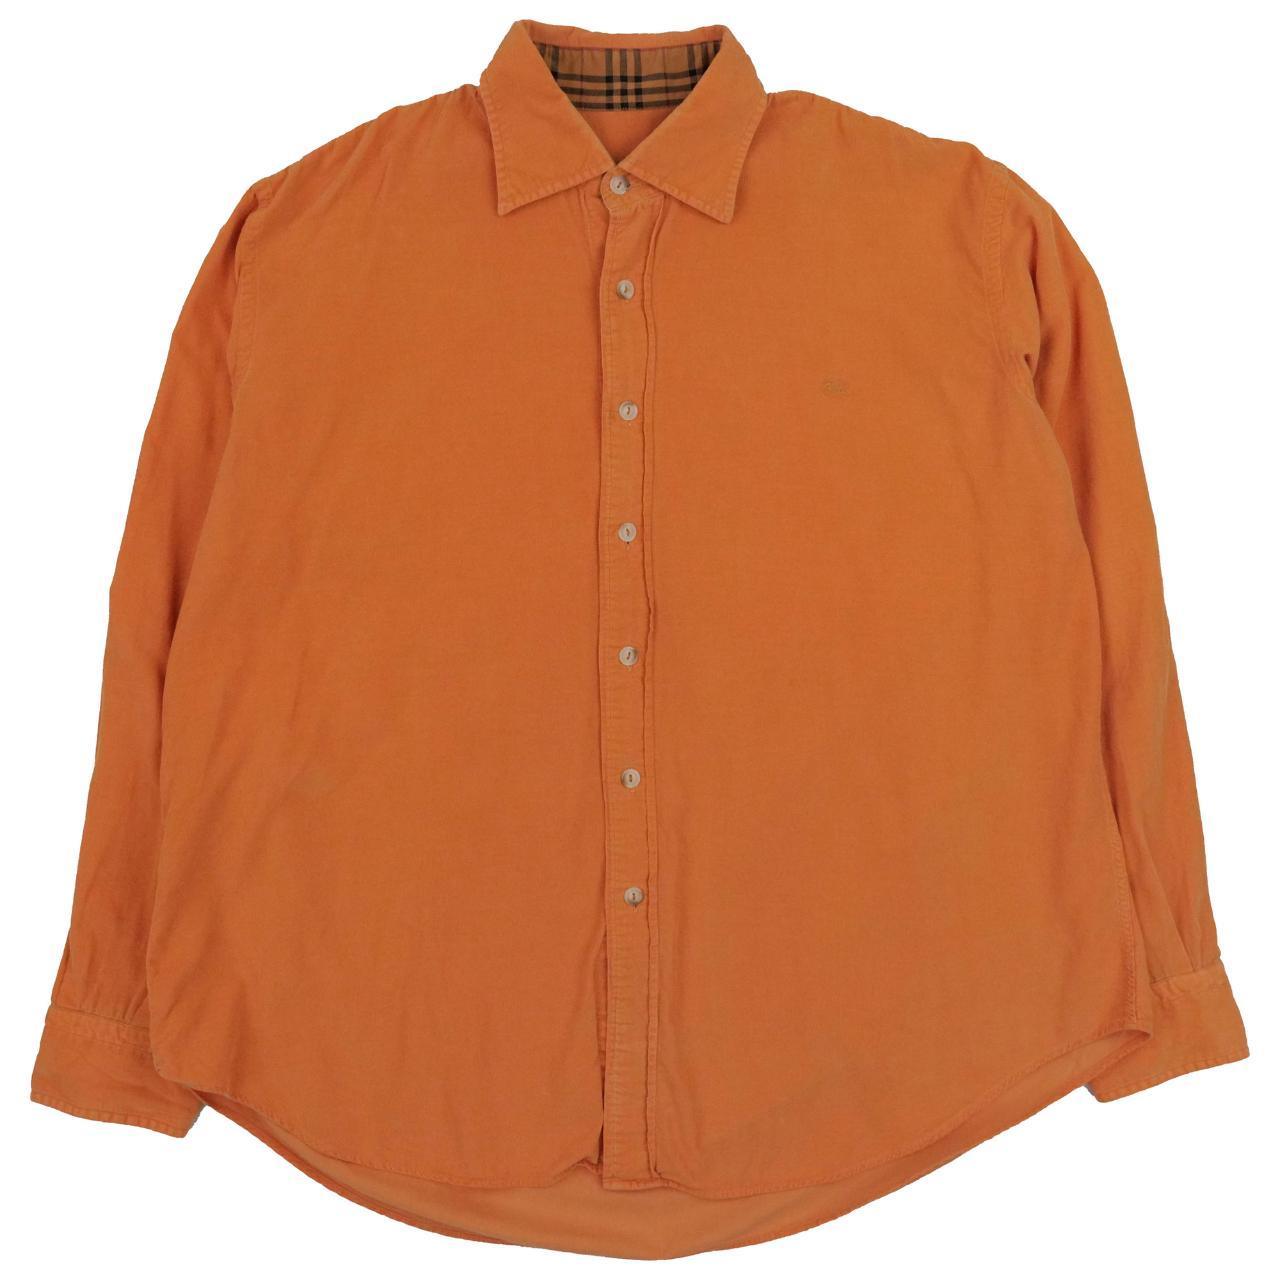 Vintage Burberry Shirt Size XL - Known Source